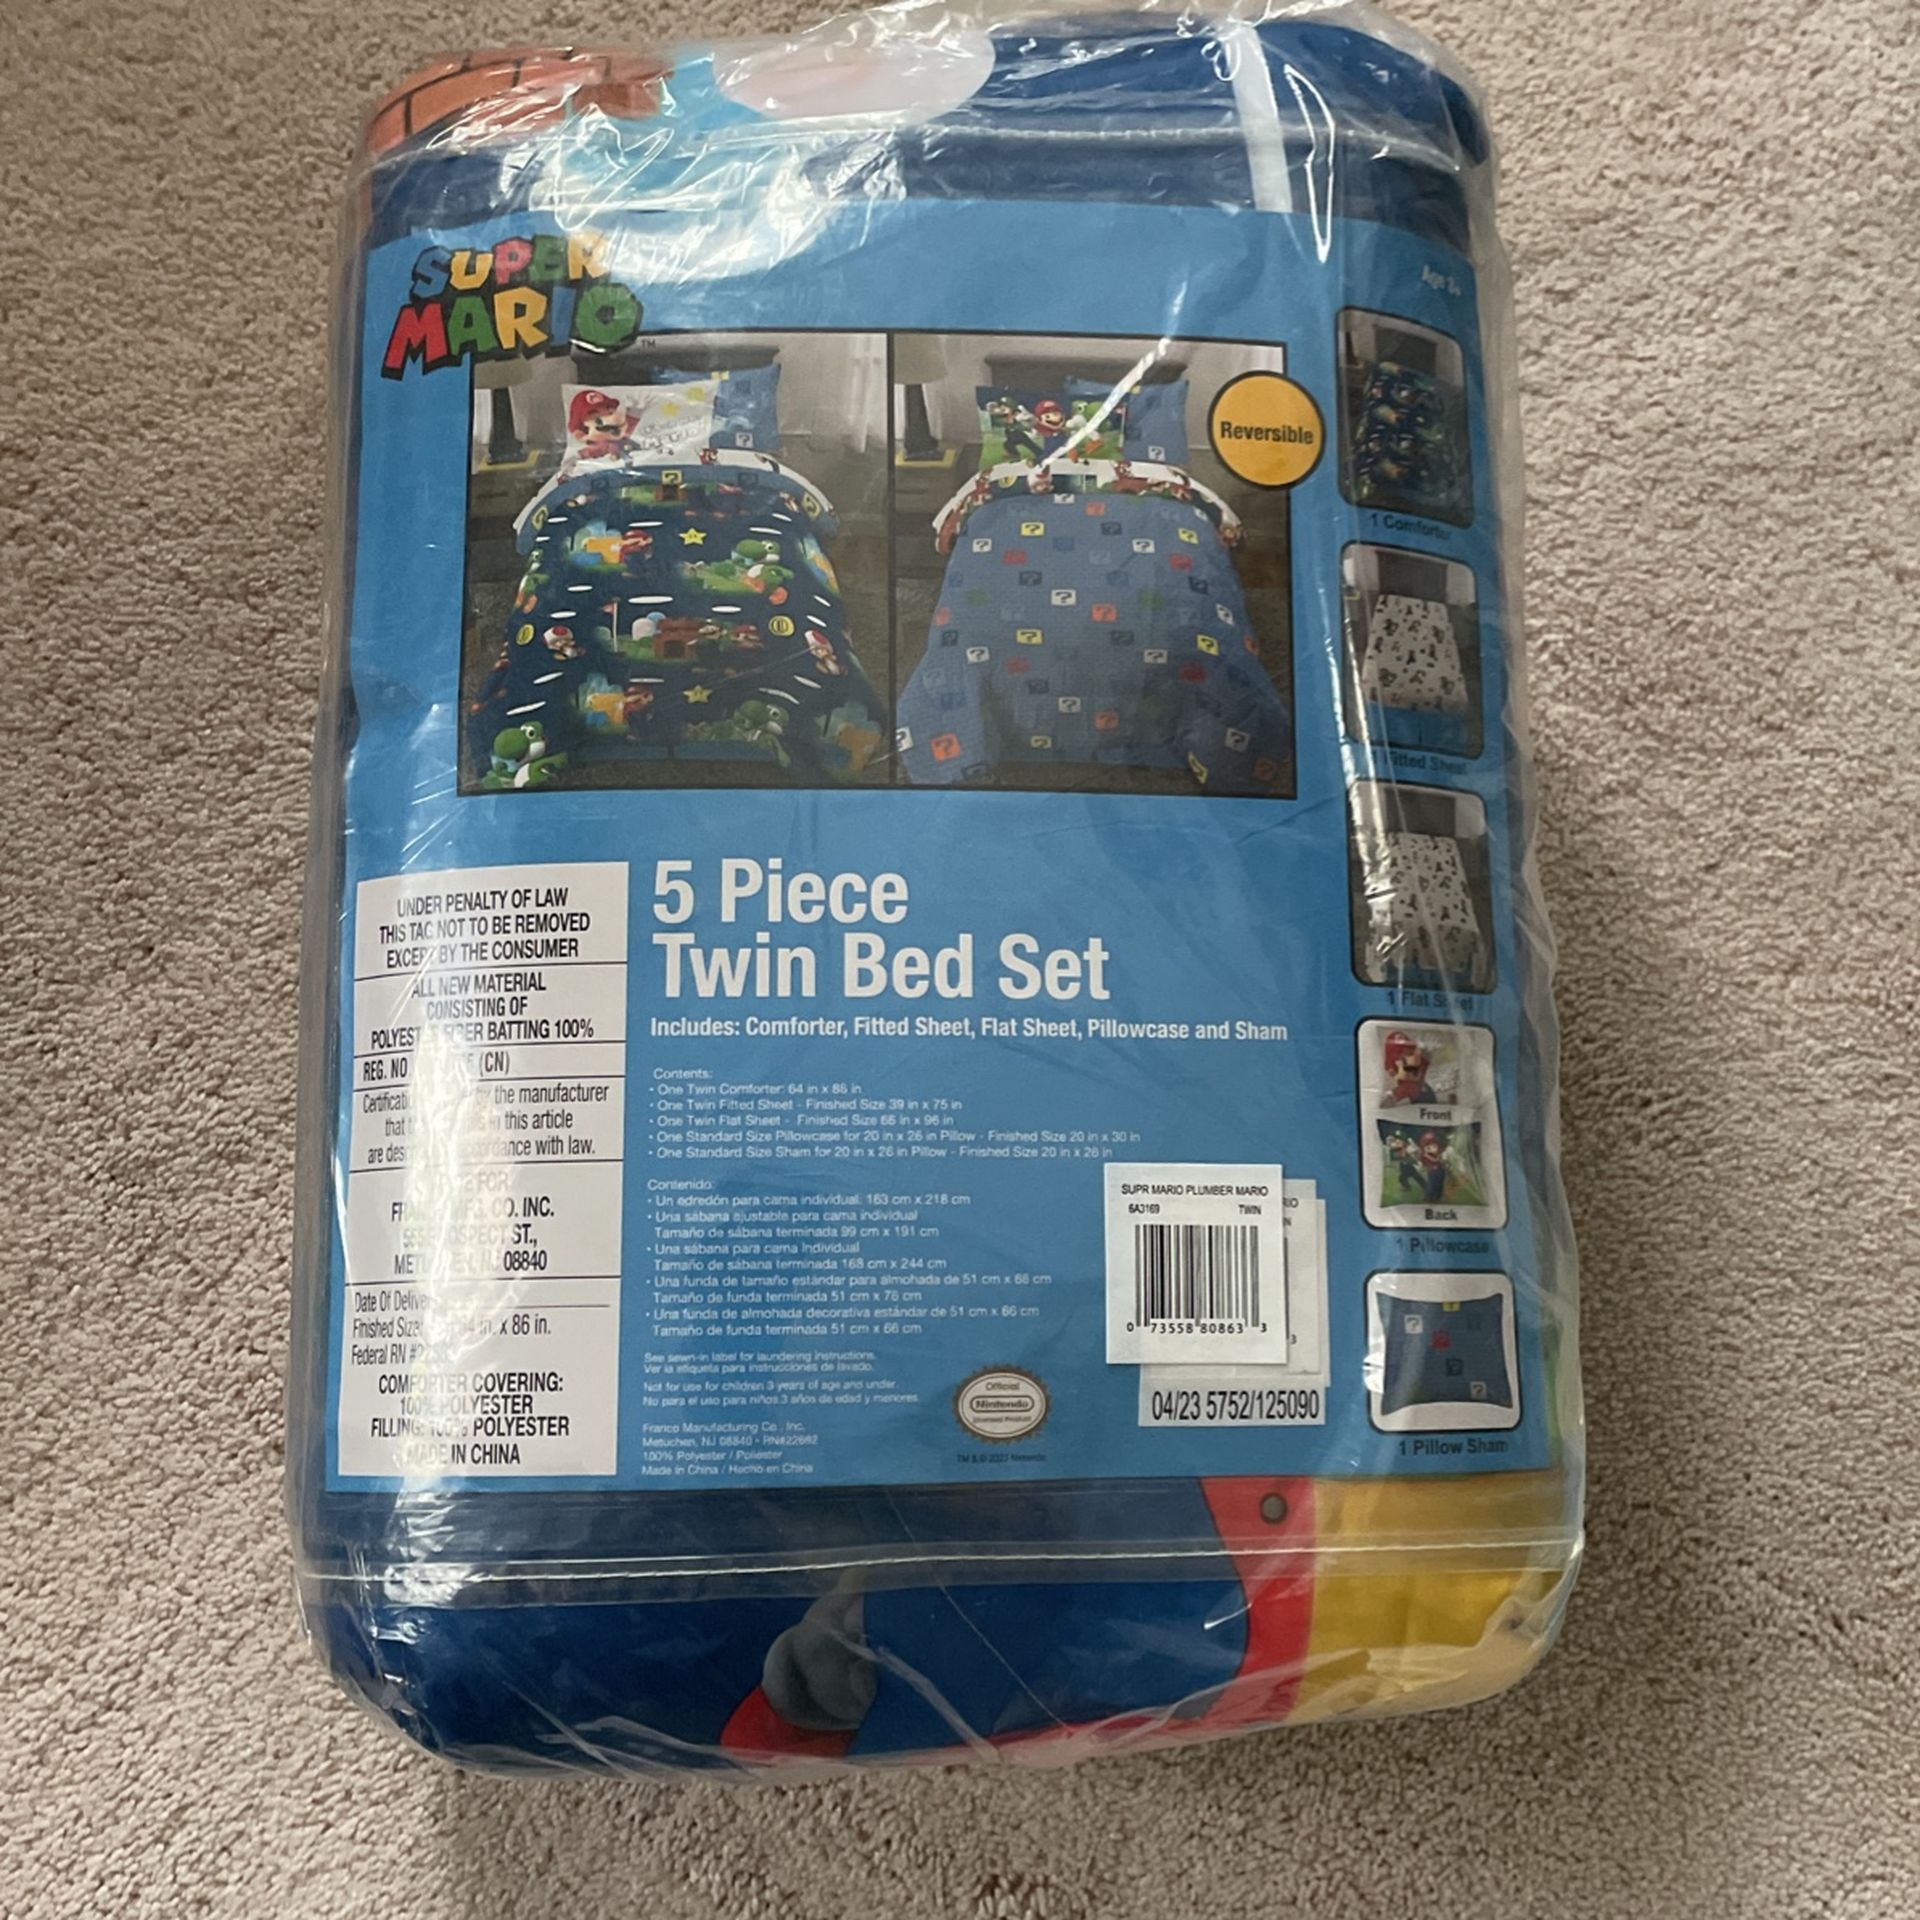 Super Mario Twin Bed Set